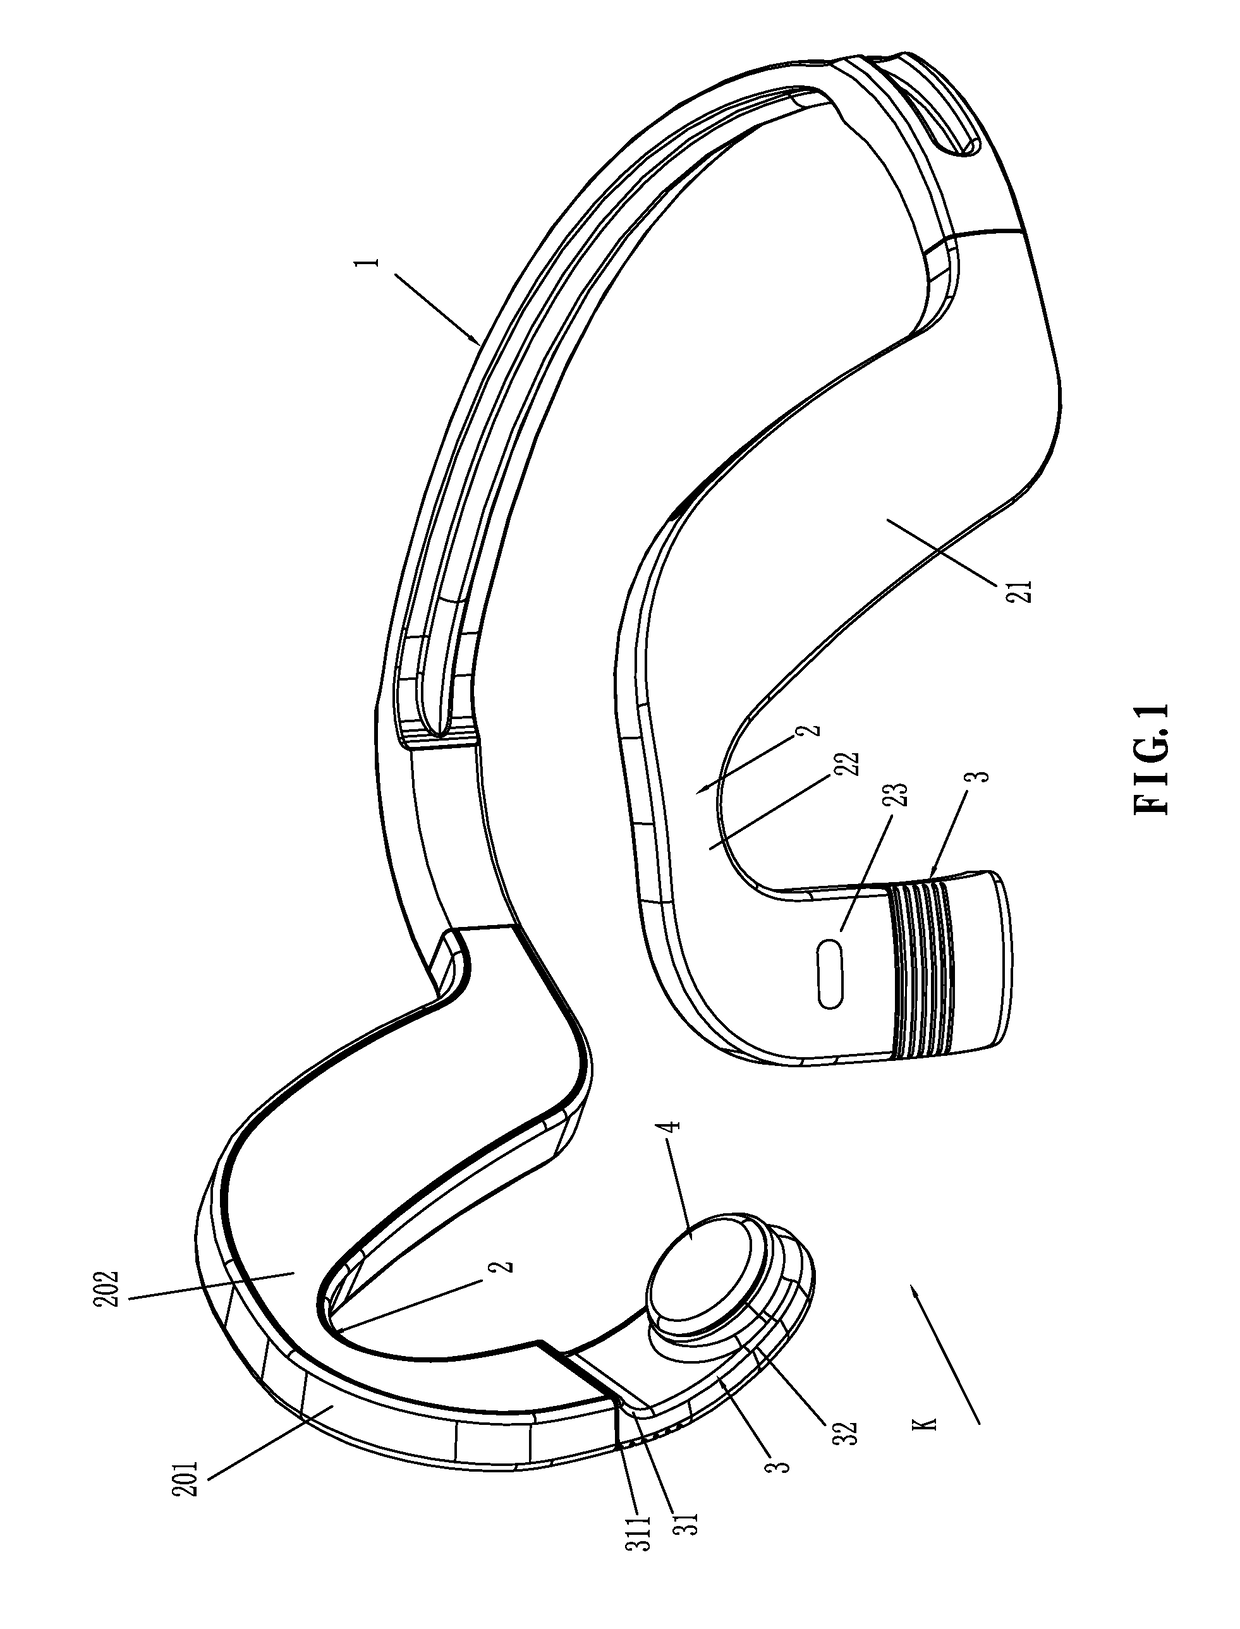 Freely adjustable ergonomic bone conduction earphone rack